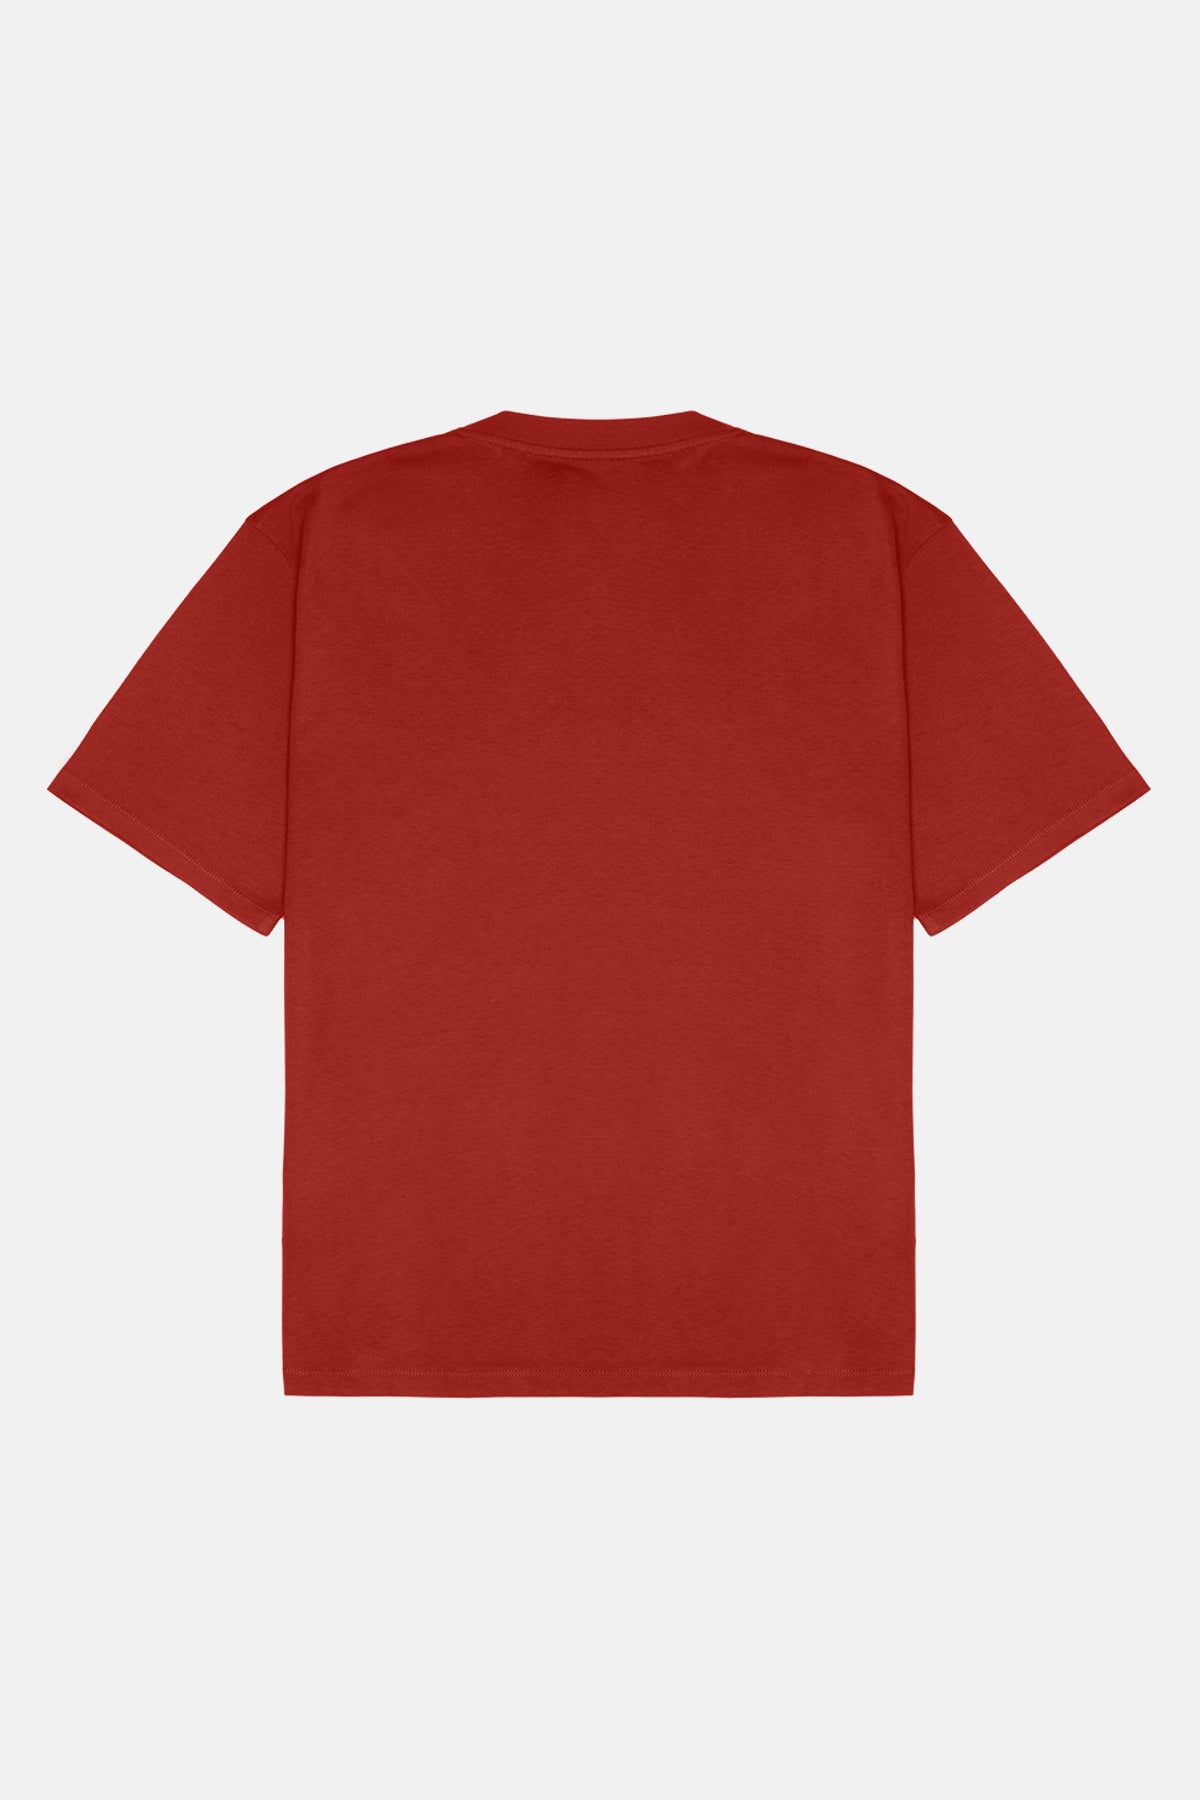 Reflect Studio // Unisex OVERSIZED  T-Shirt // Roter Panda // Rot